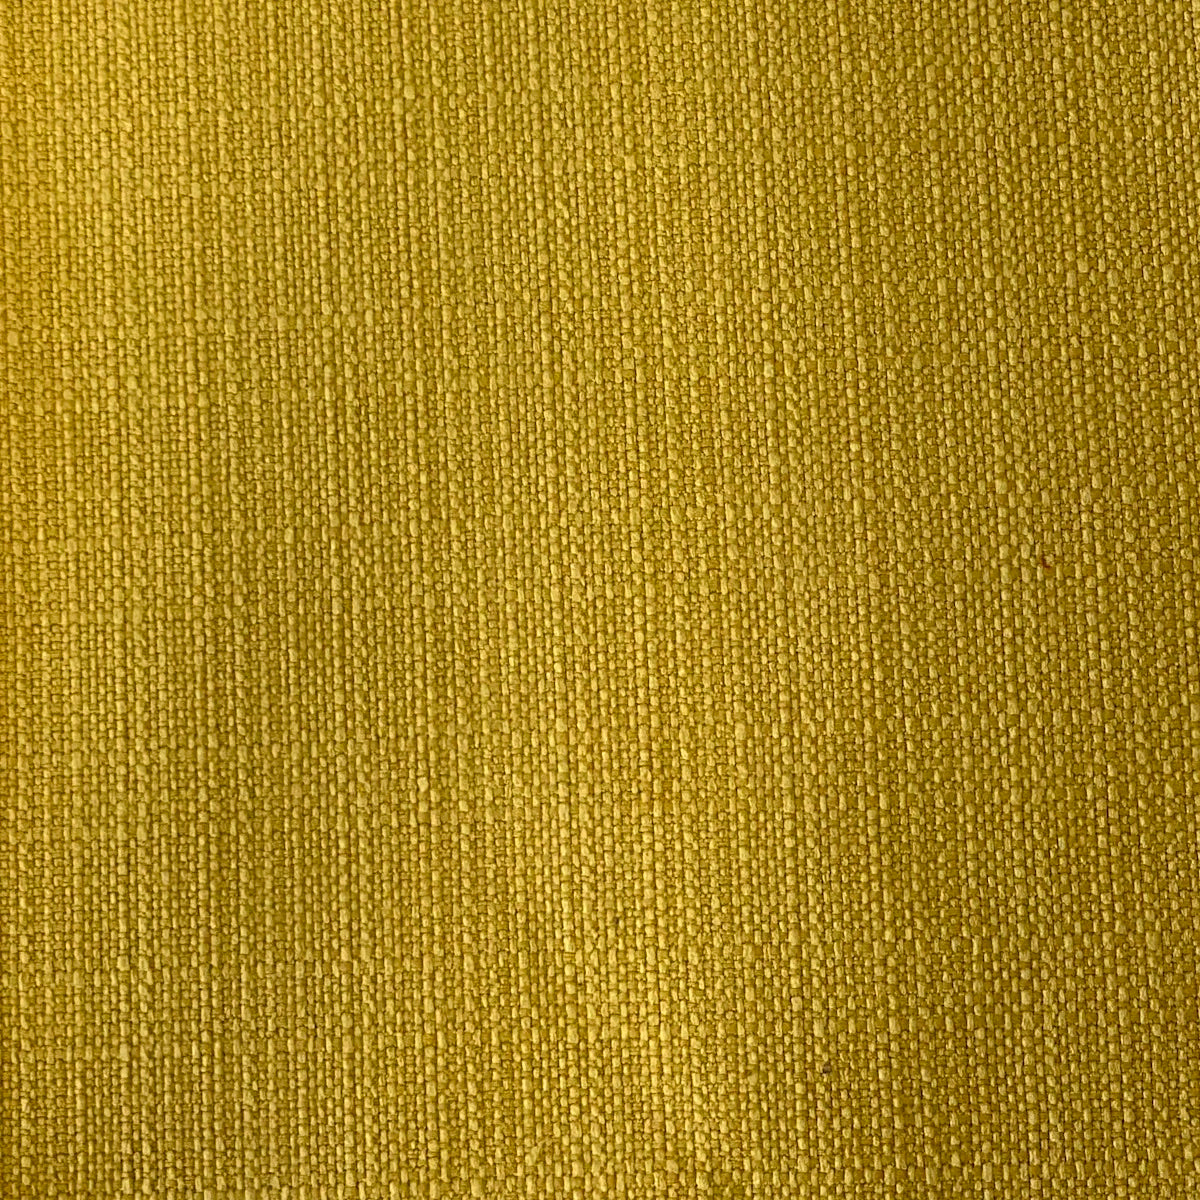 Mustard Yellow Breda Linen Upholstery Drapery Fabric - Fashion Fabrics LLC